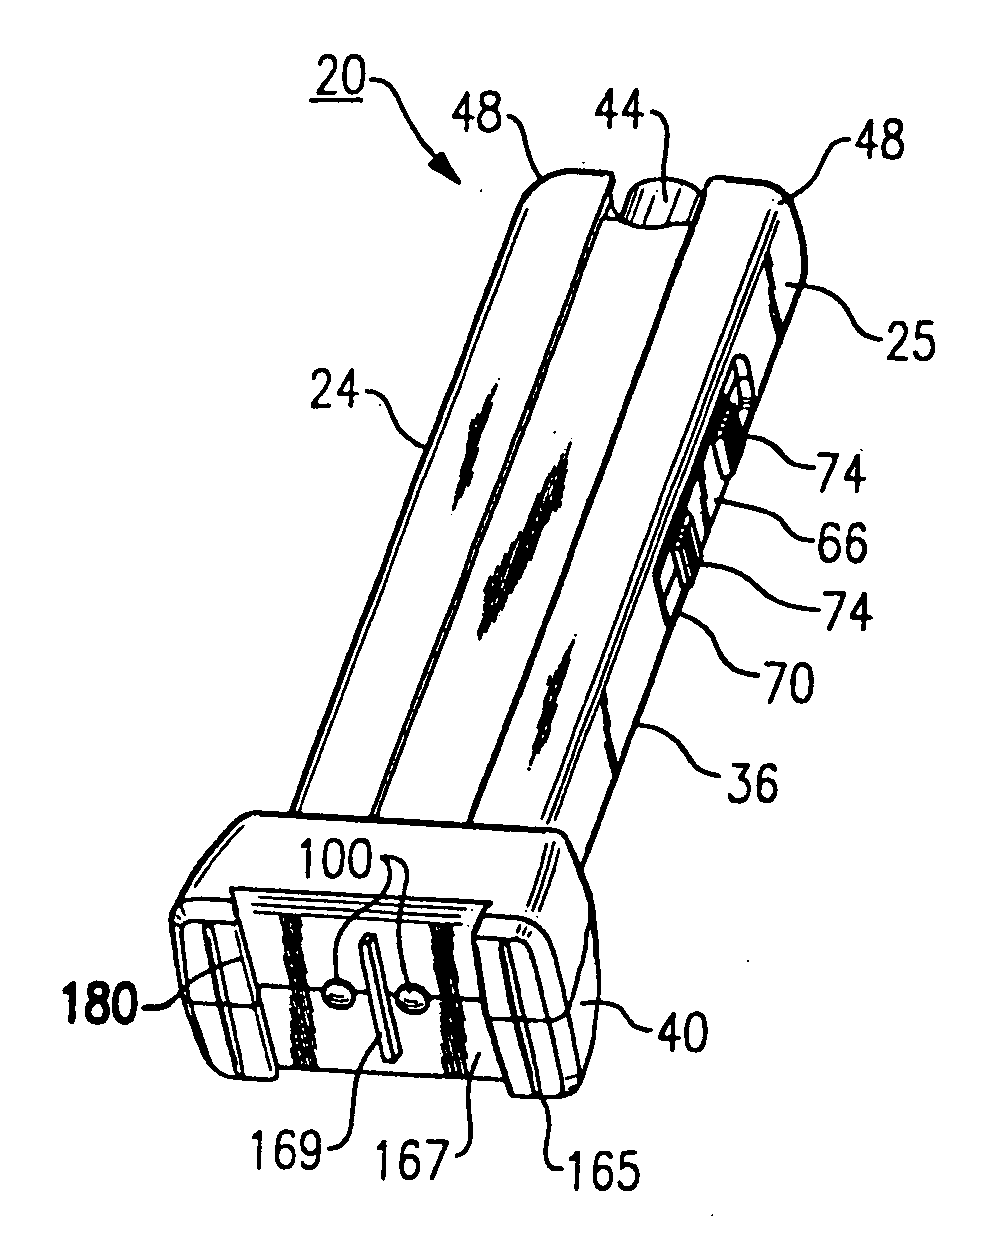 Vaginal speculum assembly having portable illuminator